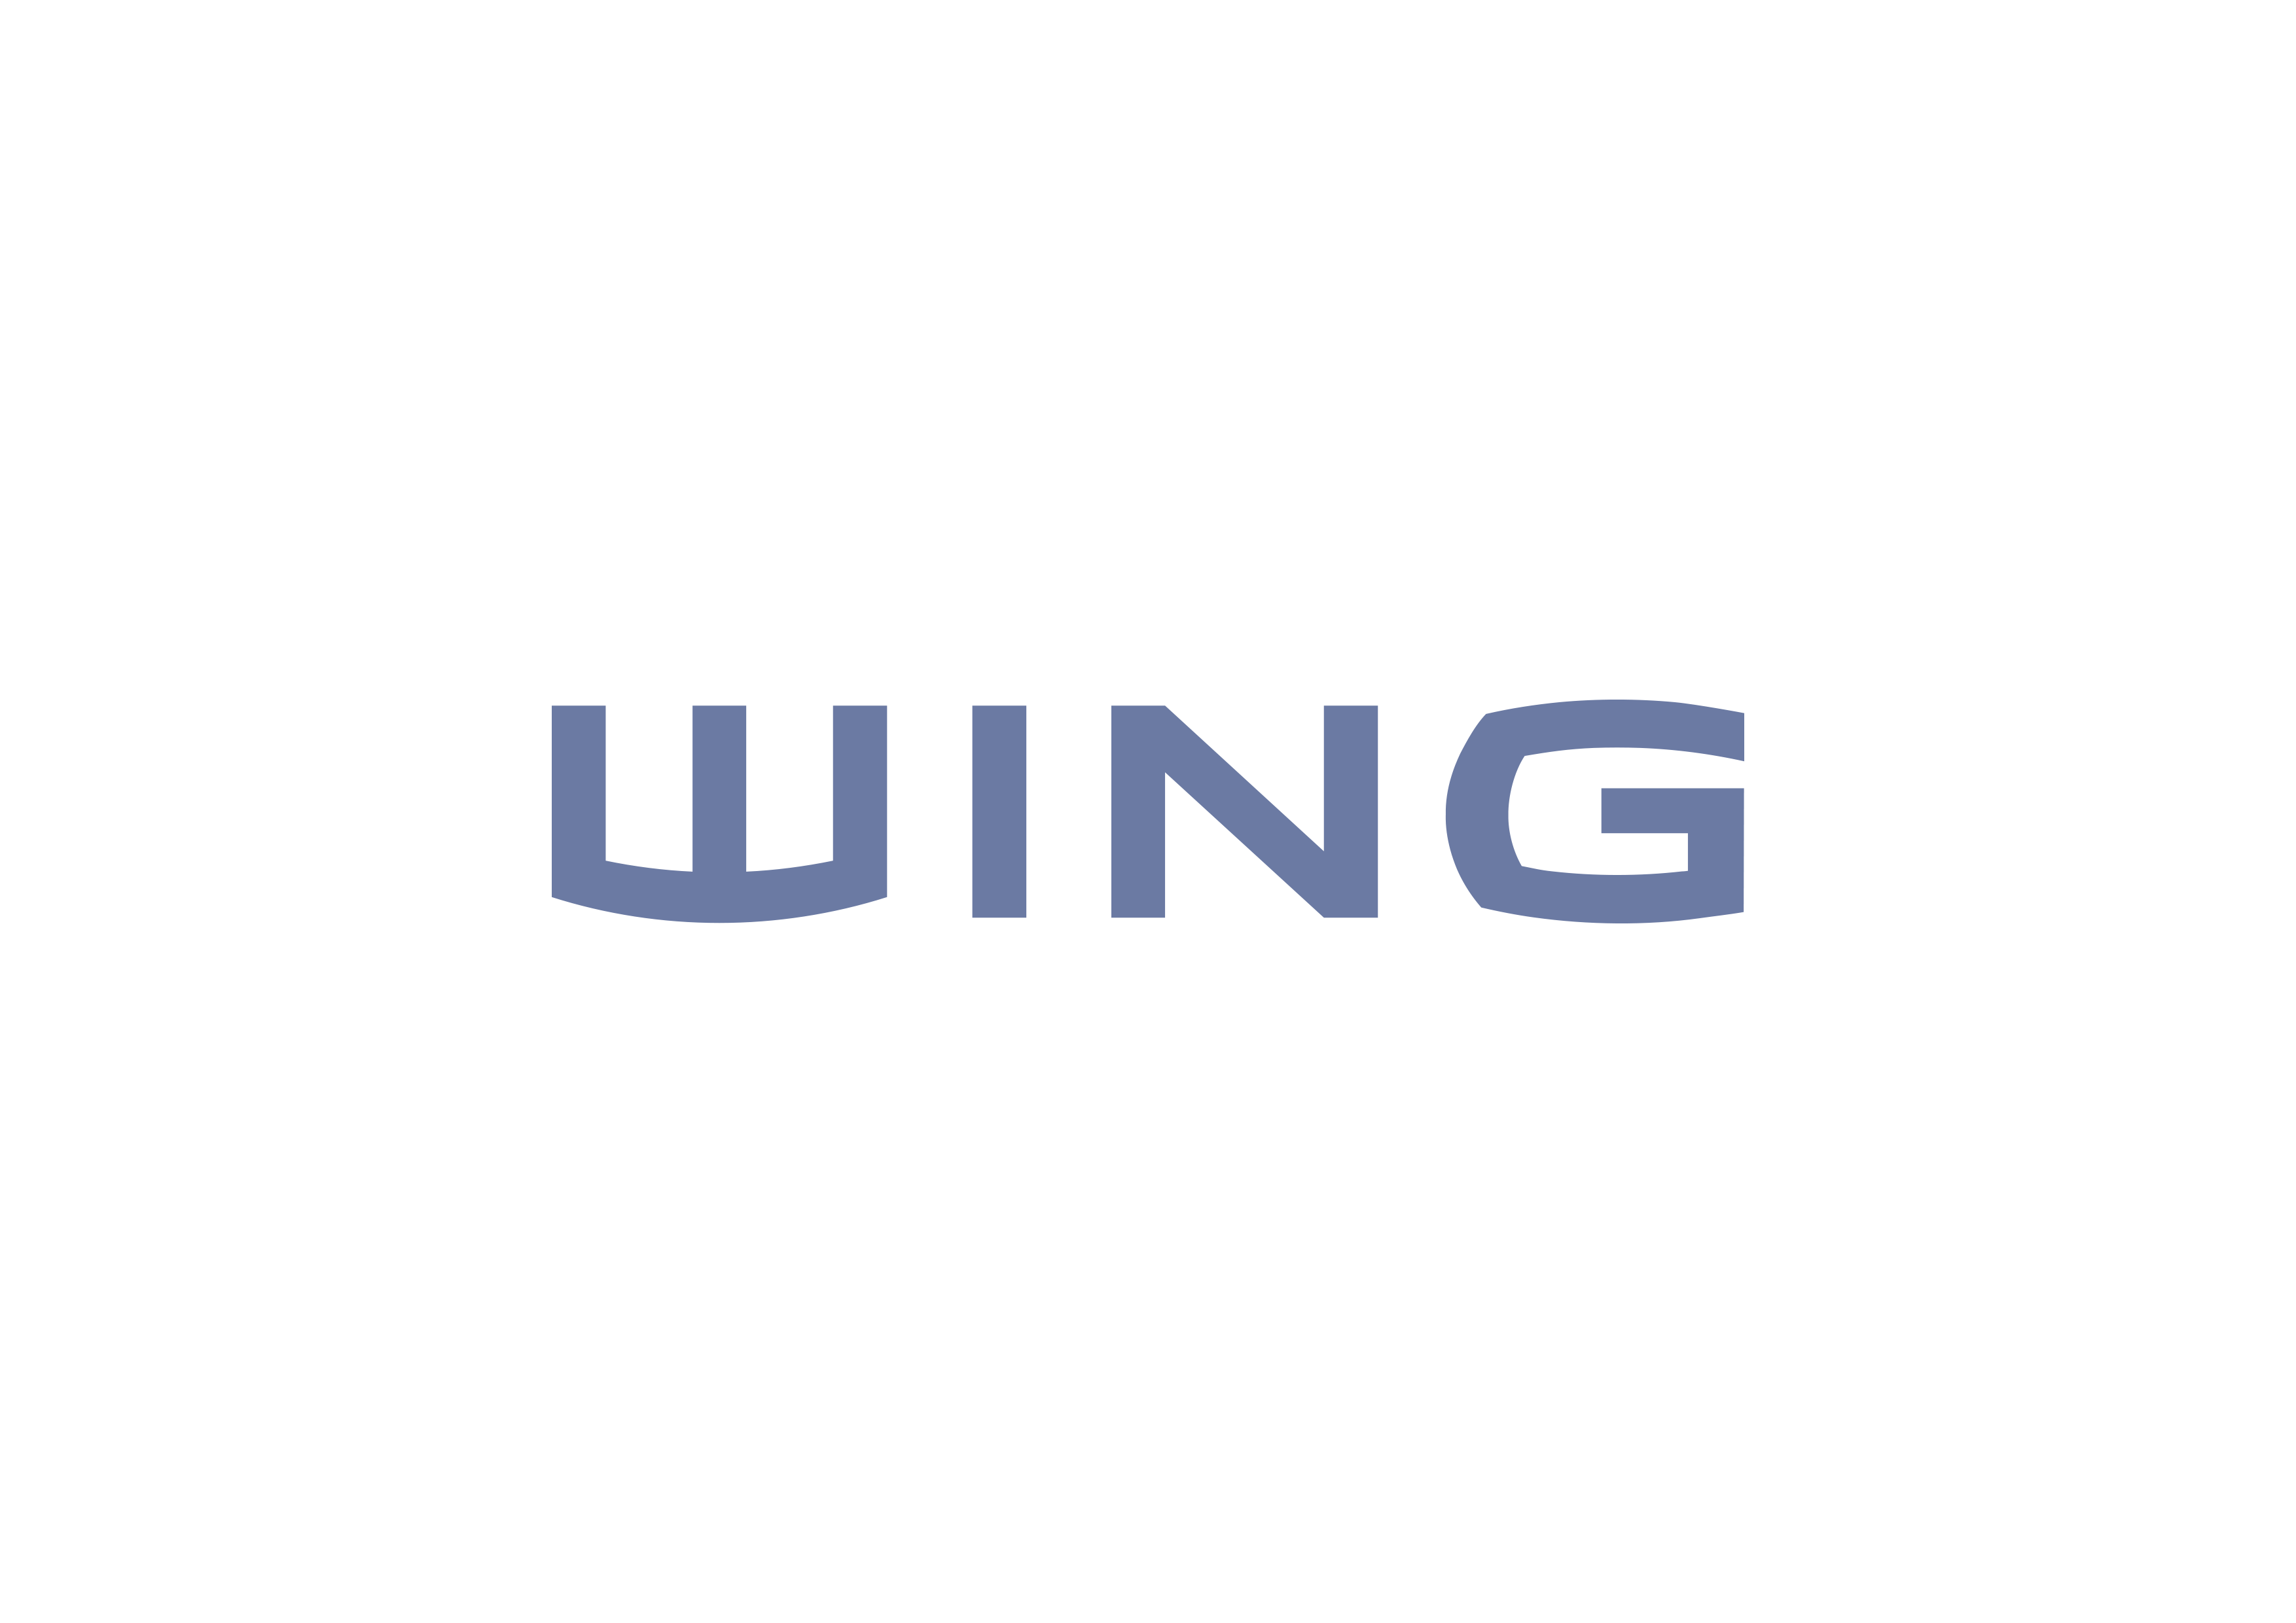 WING’s Polish subsidiary grows